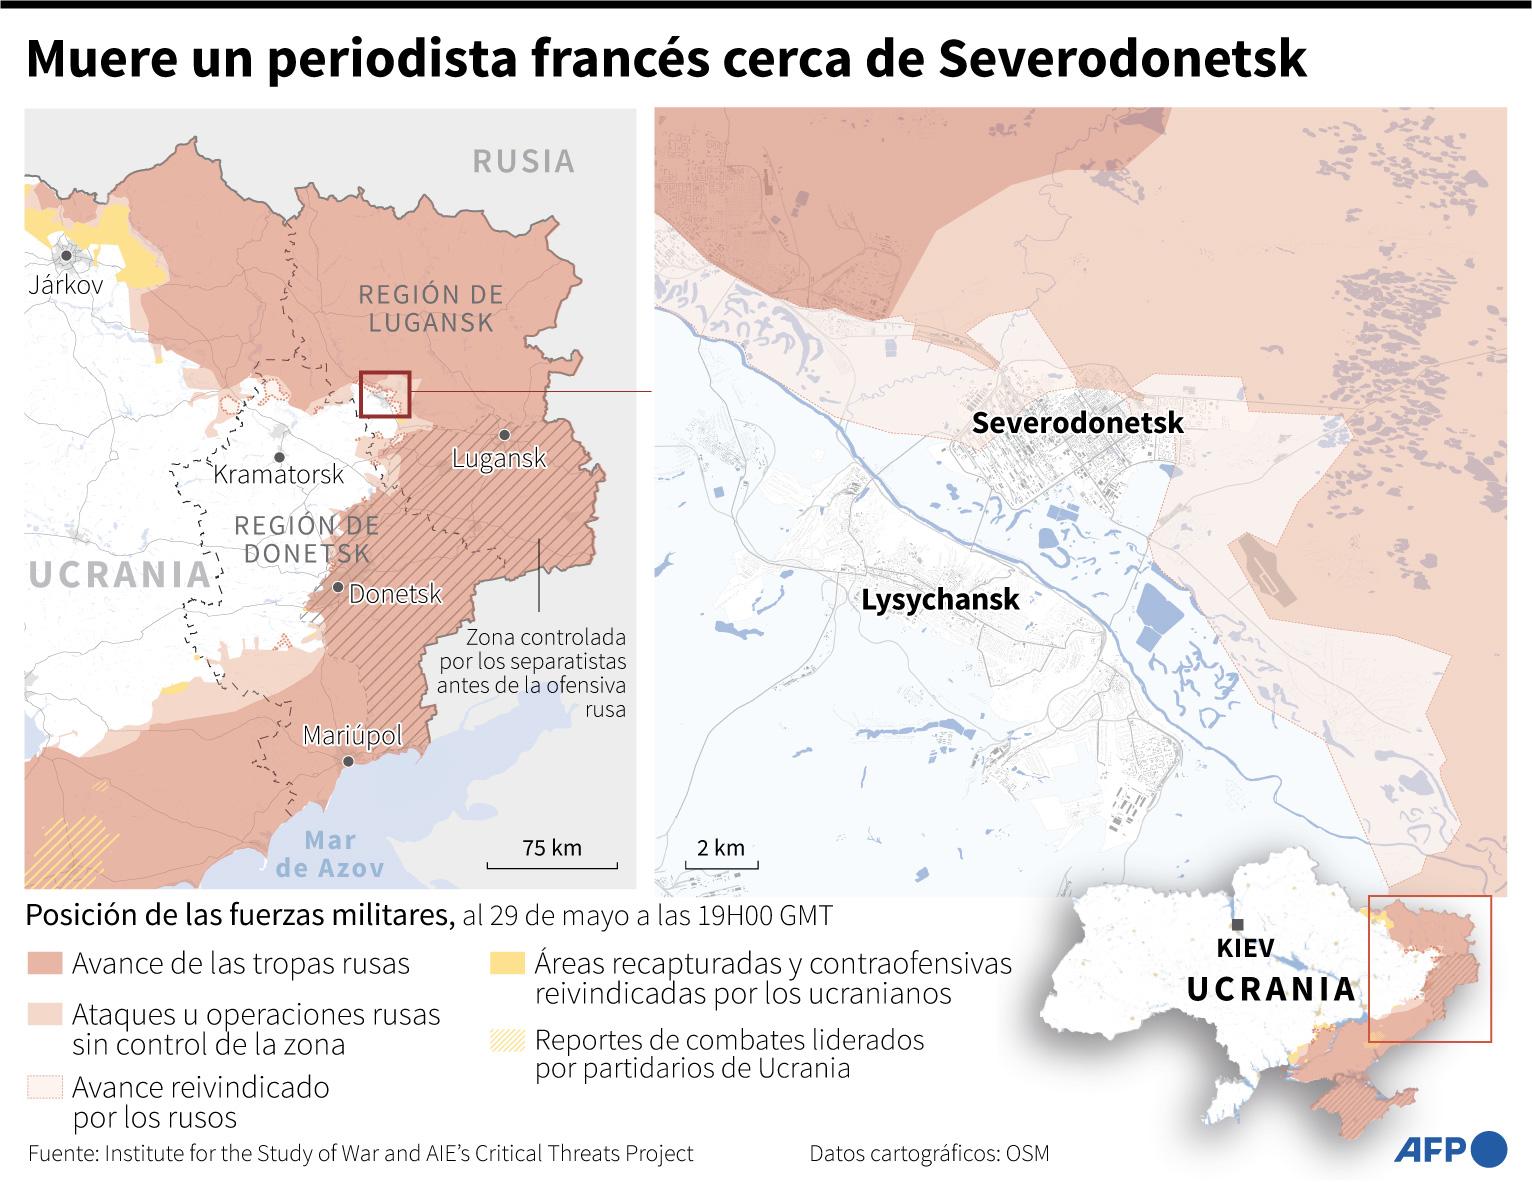 Ucrania se resiste a entregar Severodonetsk pese a avance de las tropas rusas